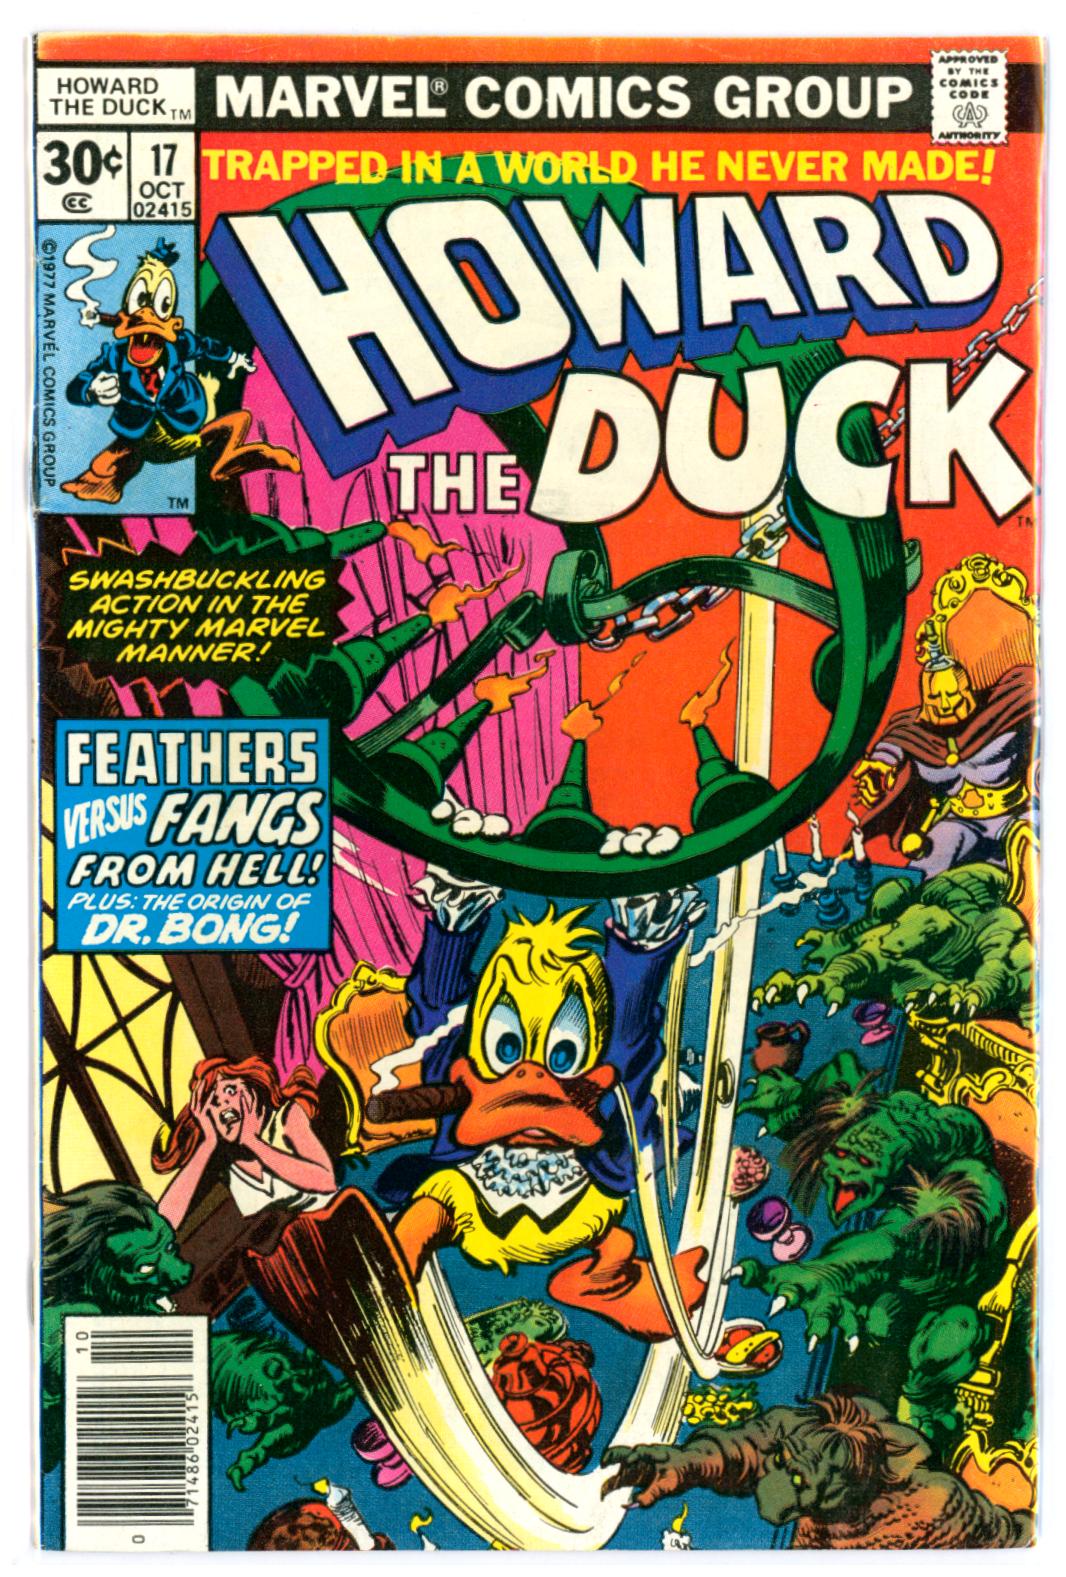 Howard the Duck #17